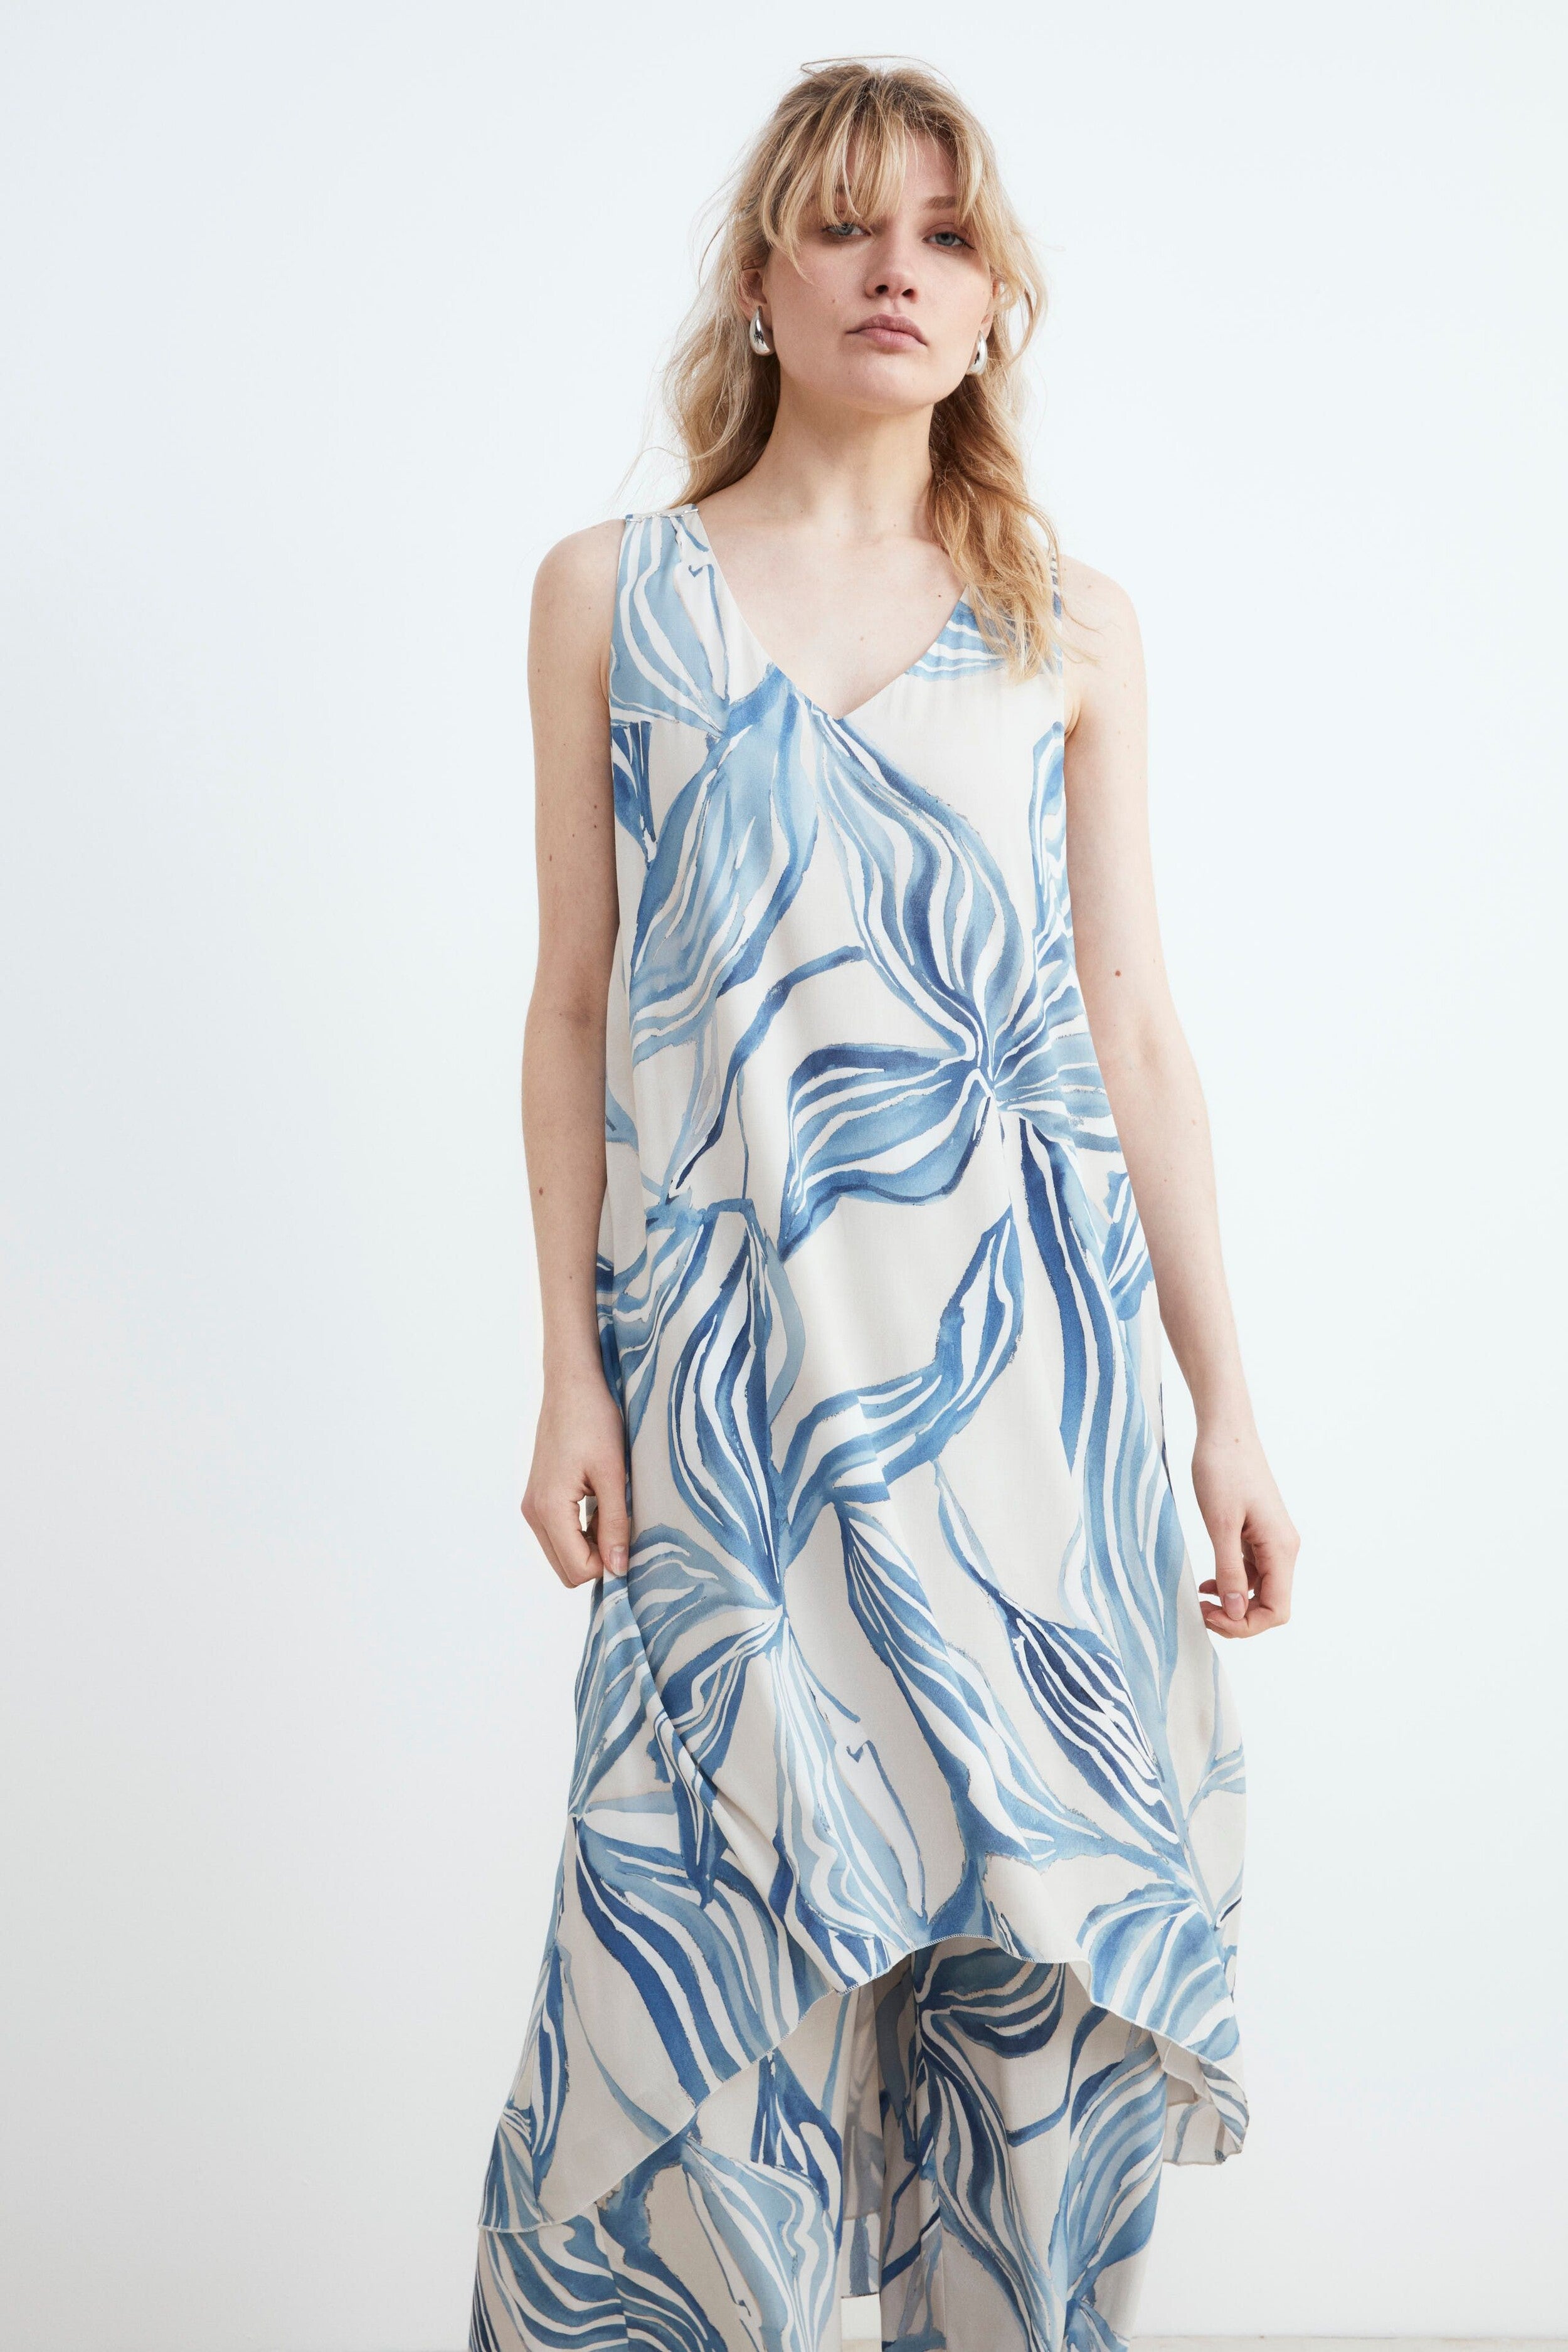 Sleeveless floral dress - Light blue pattern